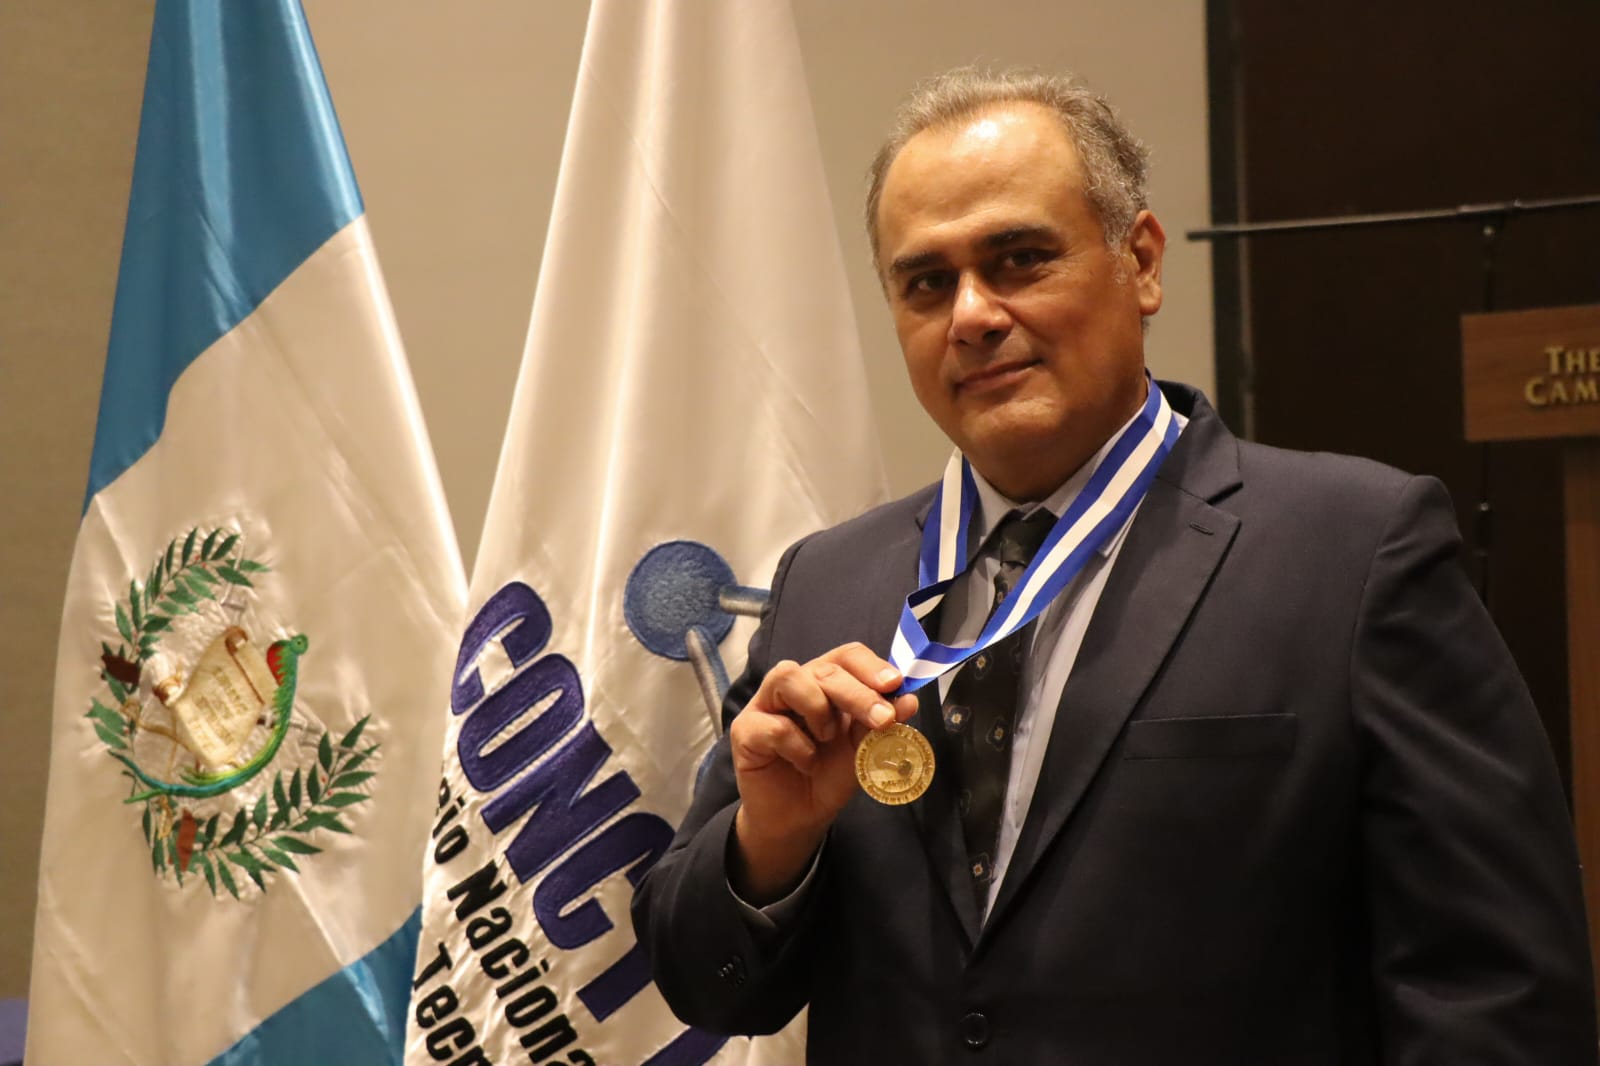 Dr. Juan Francisco Pérez Sabino was awarded the 2020 Medal of Science and Technology – Prensa Libre